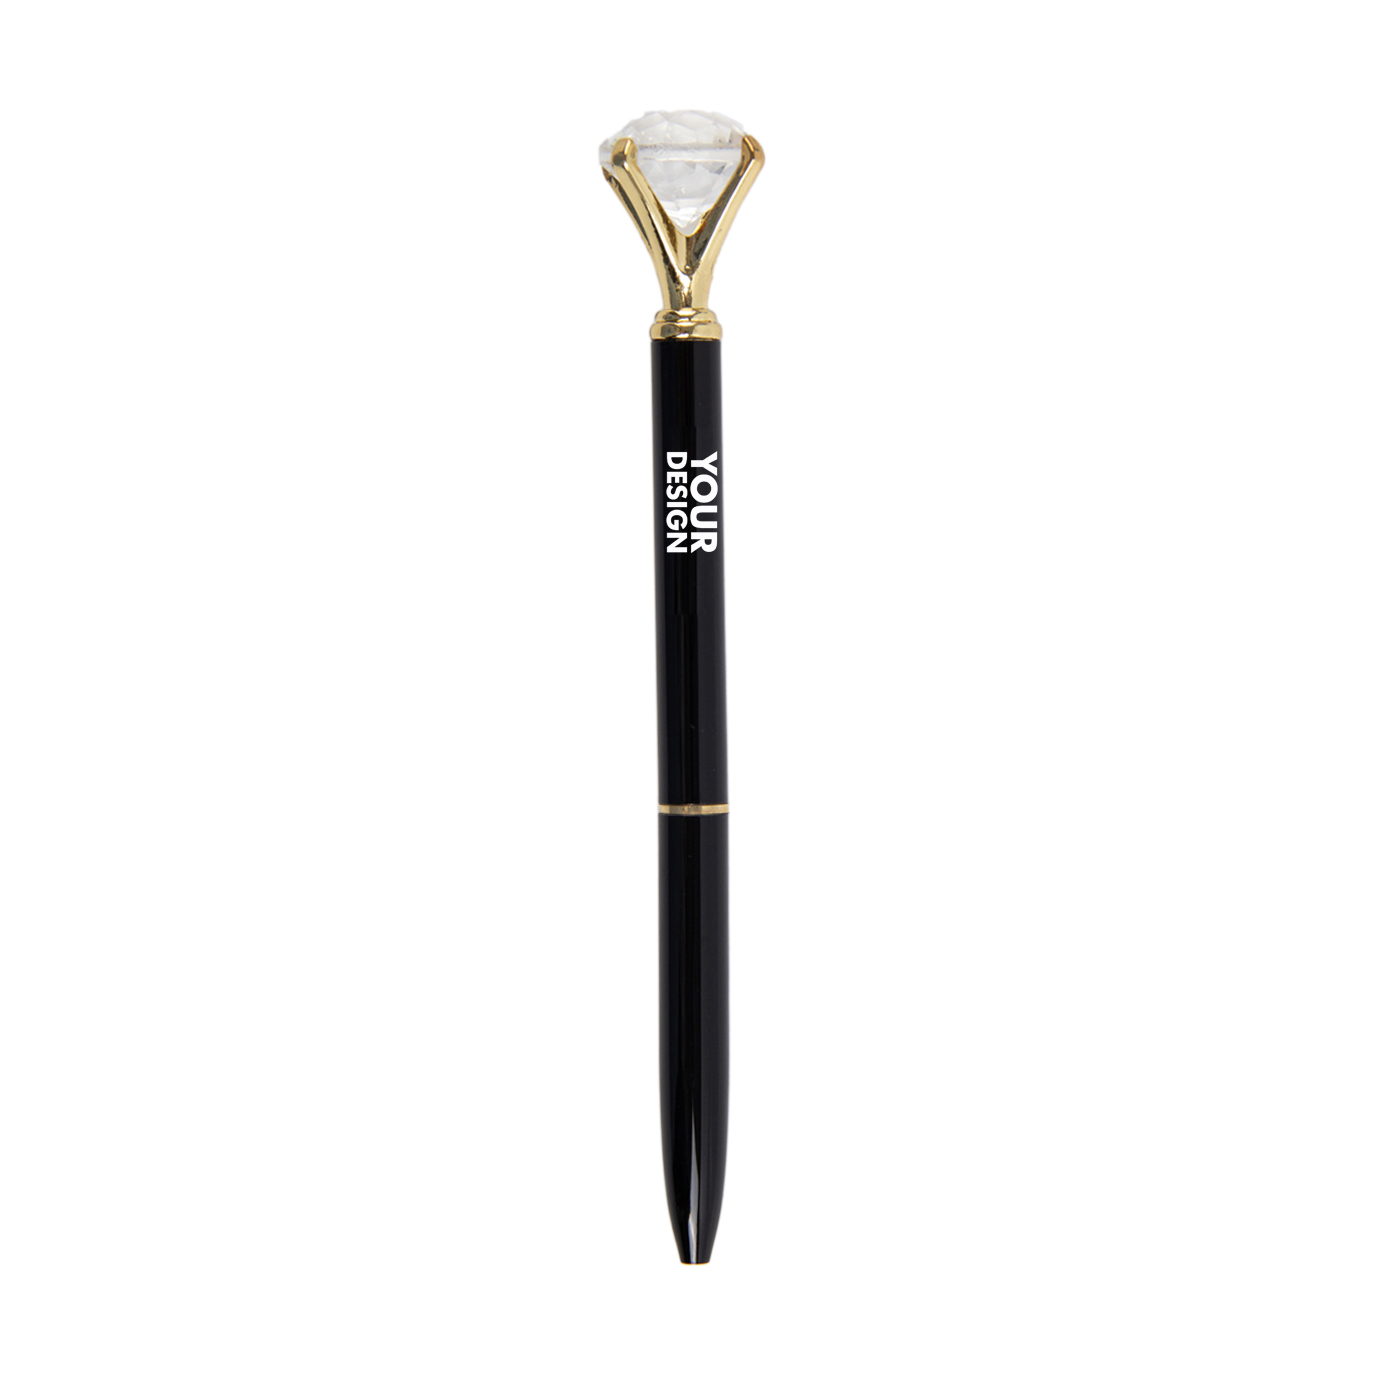 Personalized Metal Ballpoint Pen With Diamond1